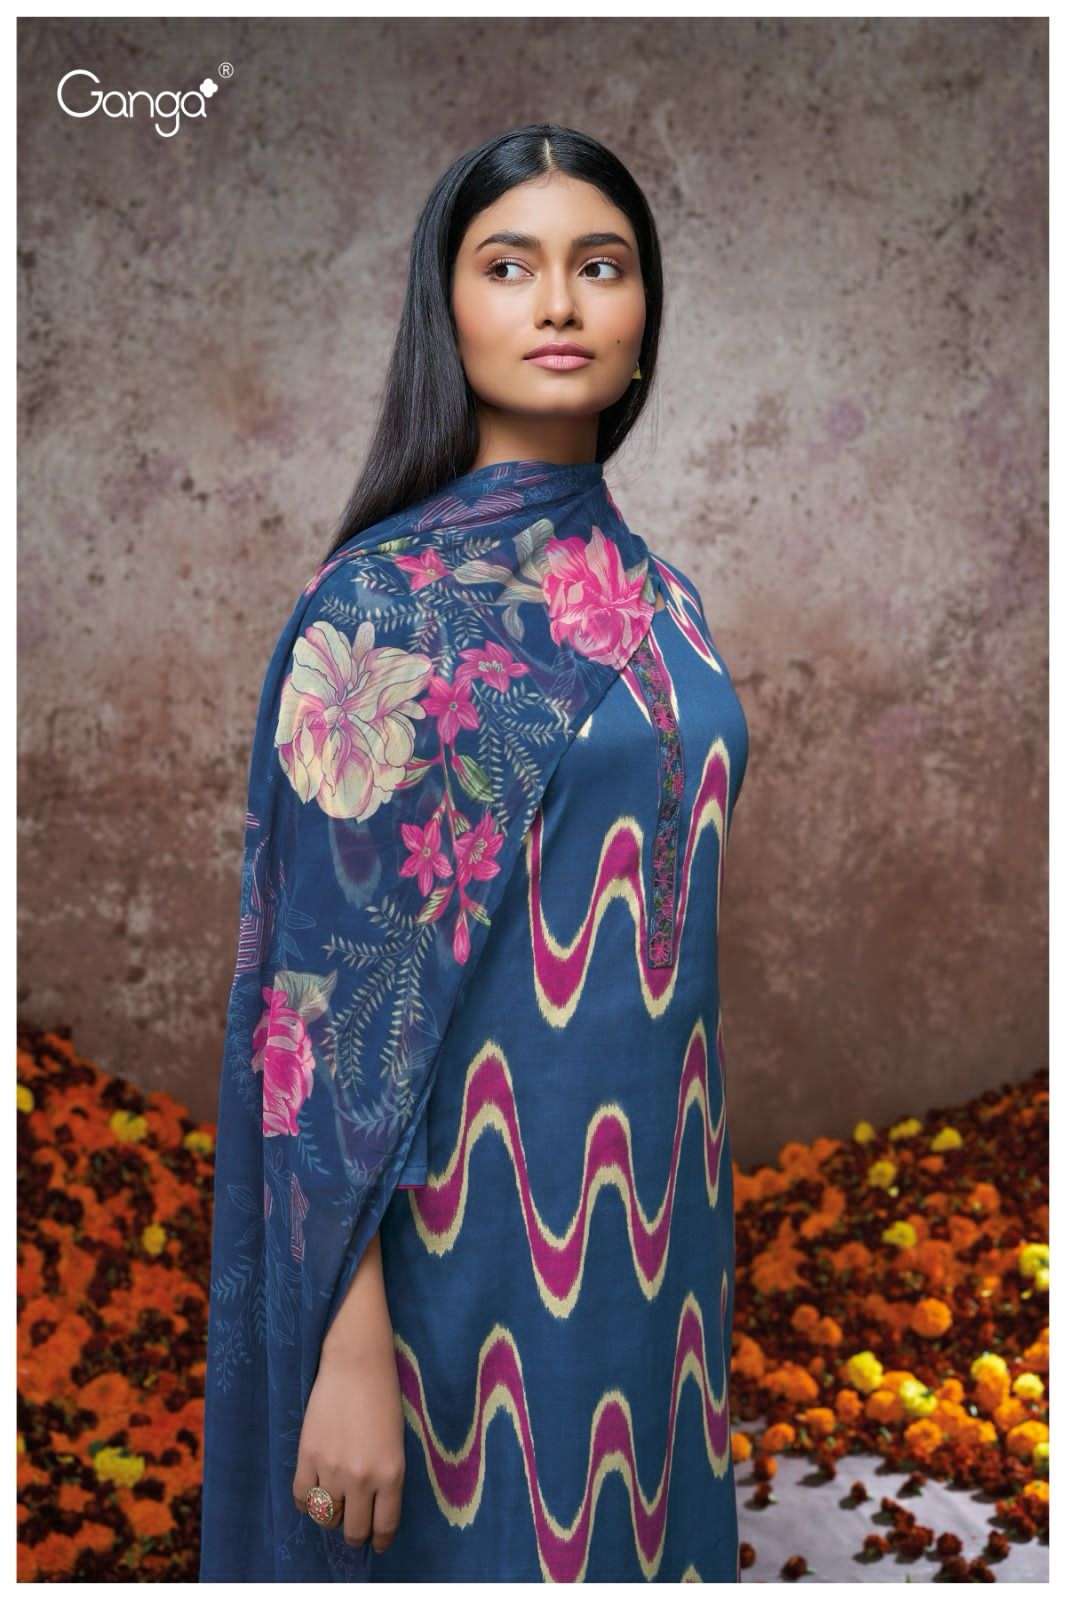 ganga sallie 2115 colour series designer wedding wear salwar kameez wholesaler surat gujarat